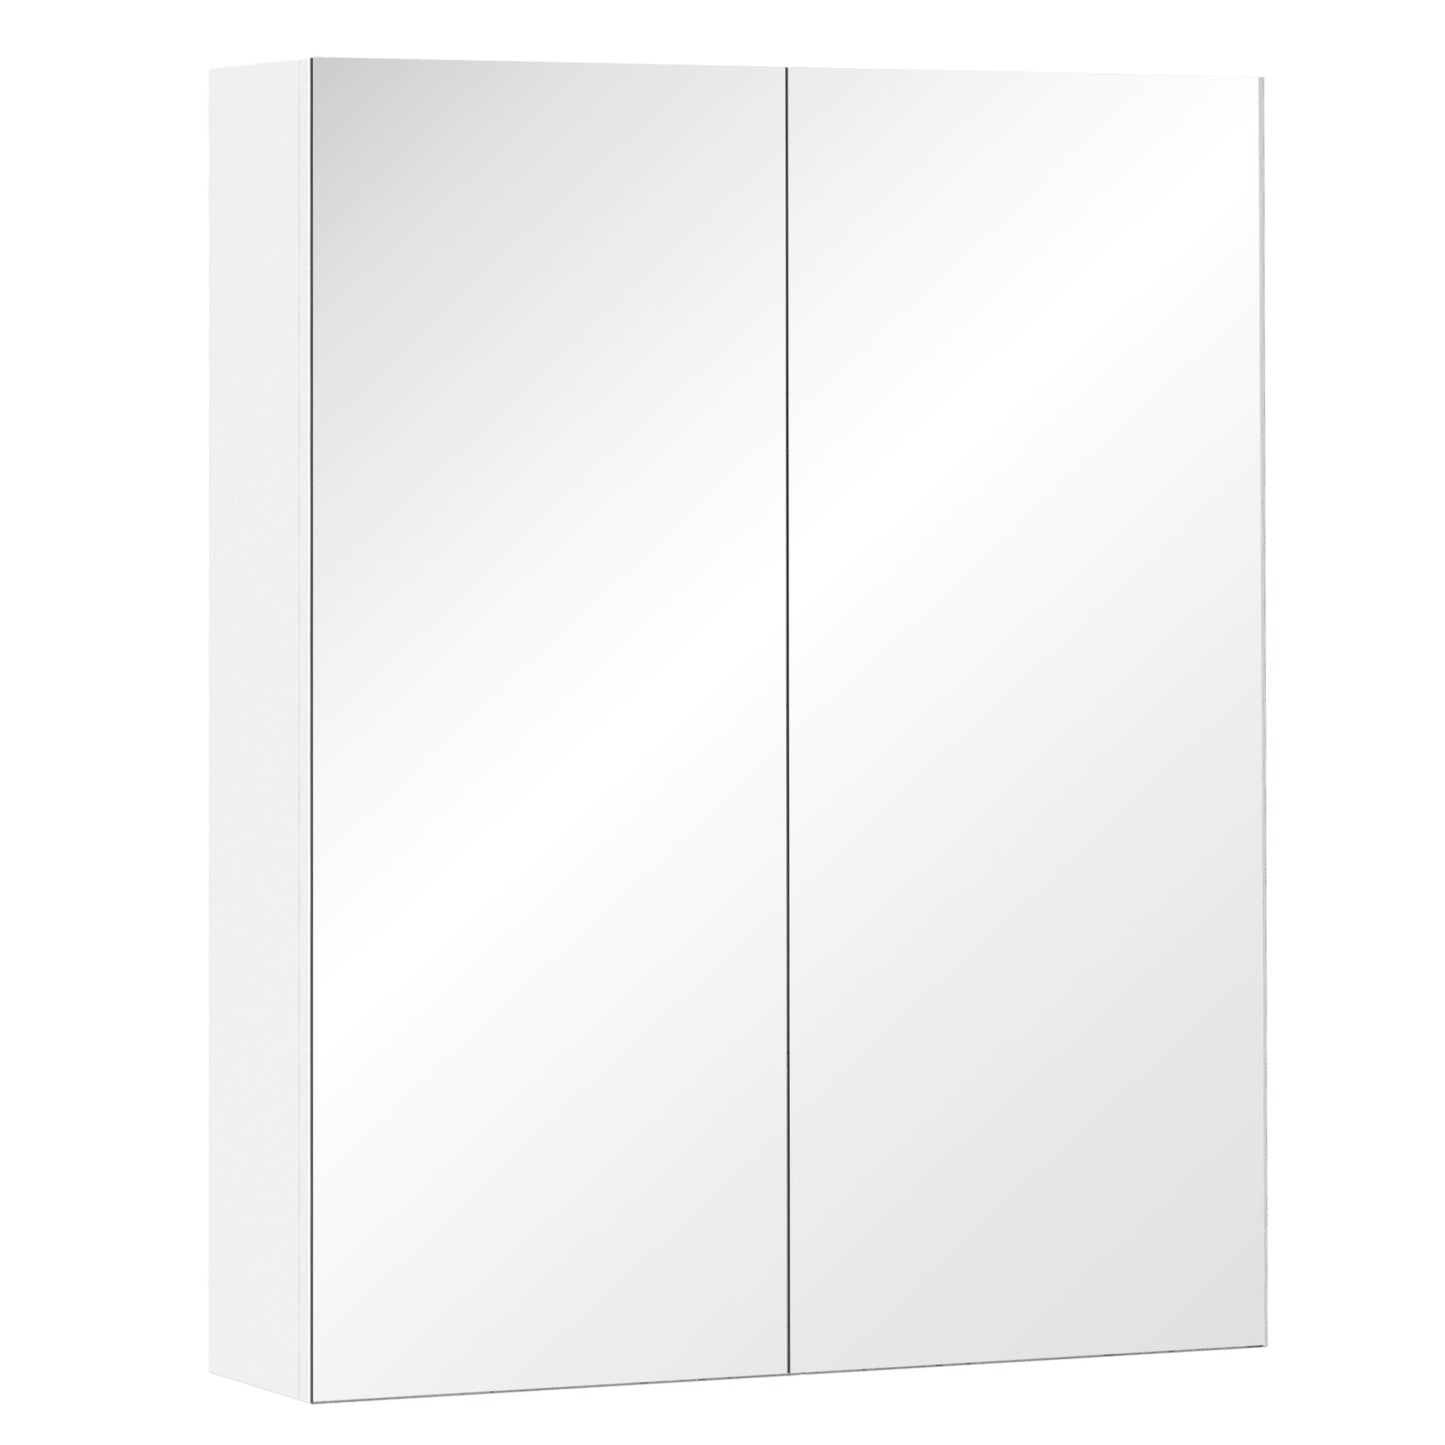 Wall Mount Medicine Cabinet with Mirror, Bathroom Mirror Cabinet Storage Organizer with Adjustable Shelf, Double Door Cupboard, Soft Closing, White, 23.5" x 29.5" at Gallery Canada